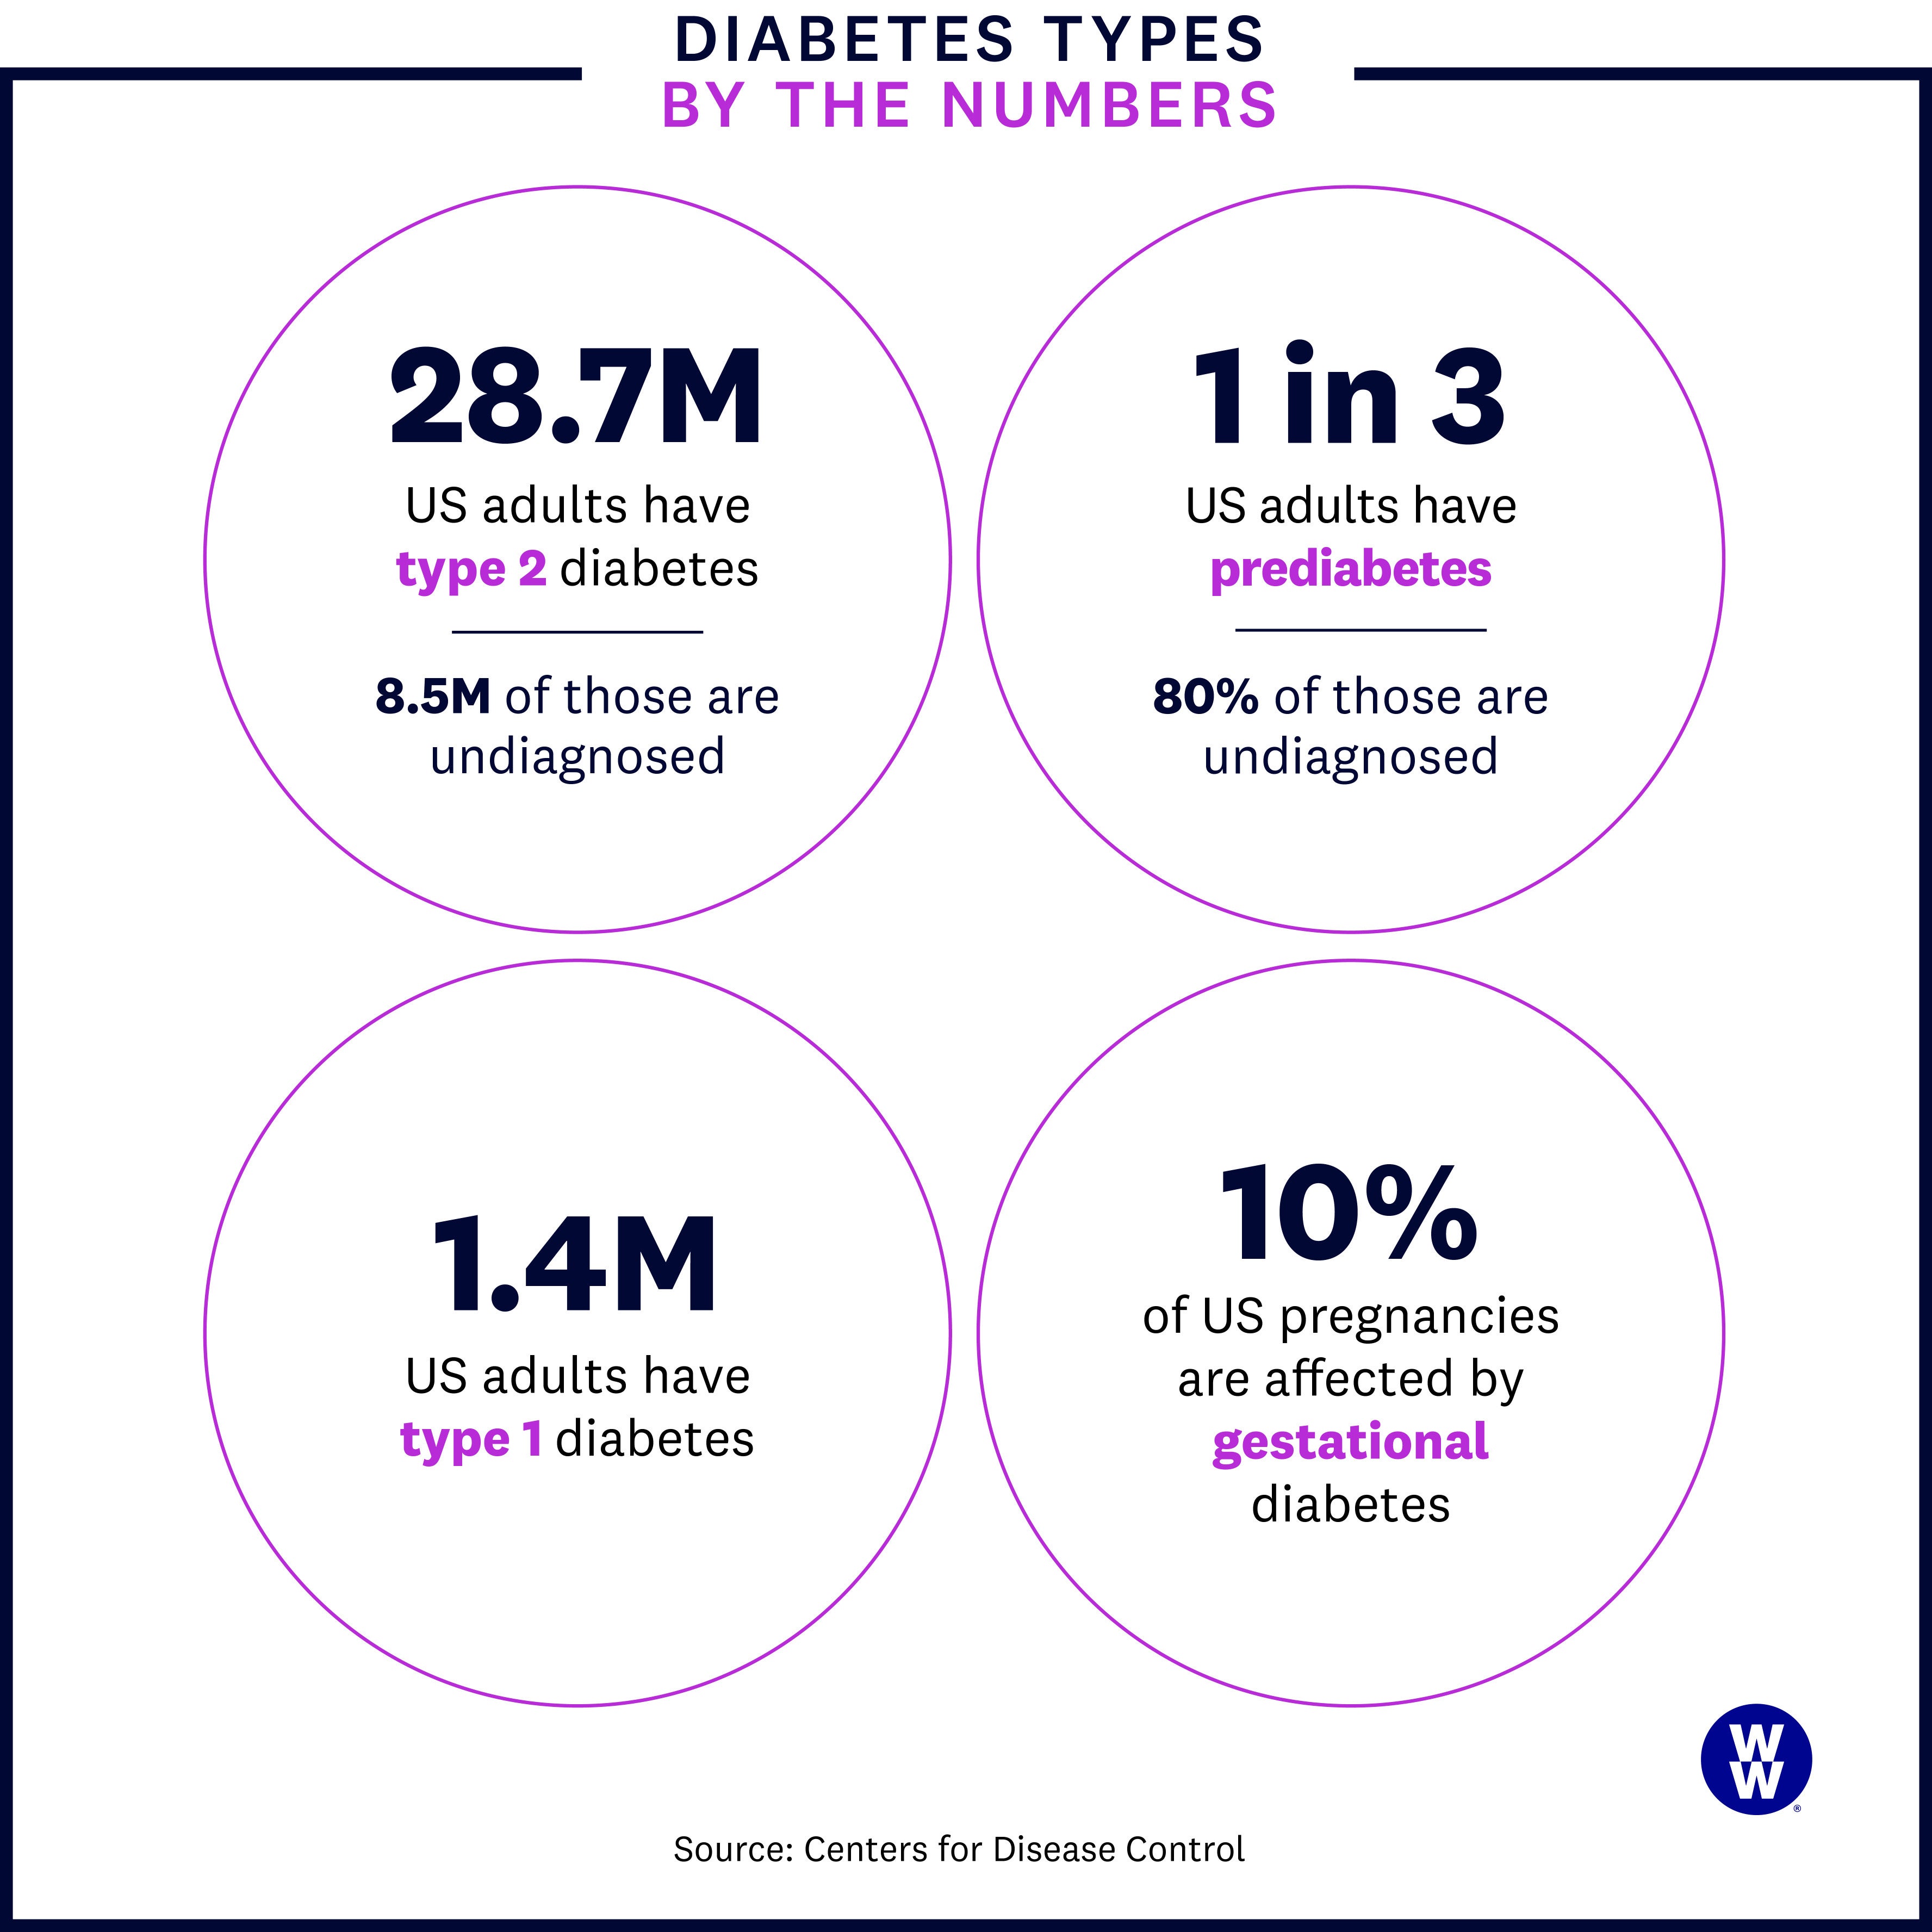 Types of Diabetes by numbers